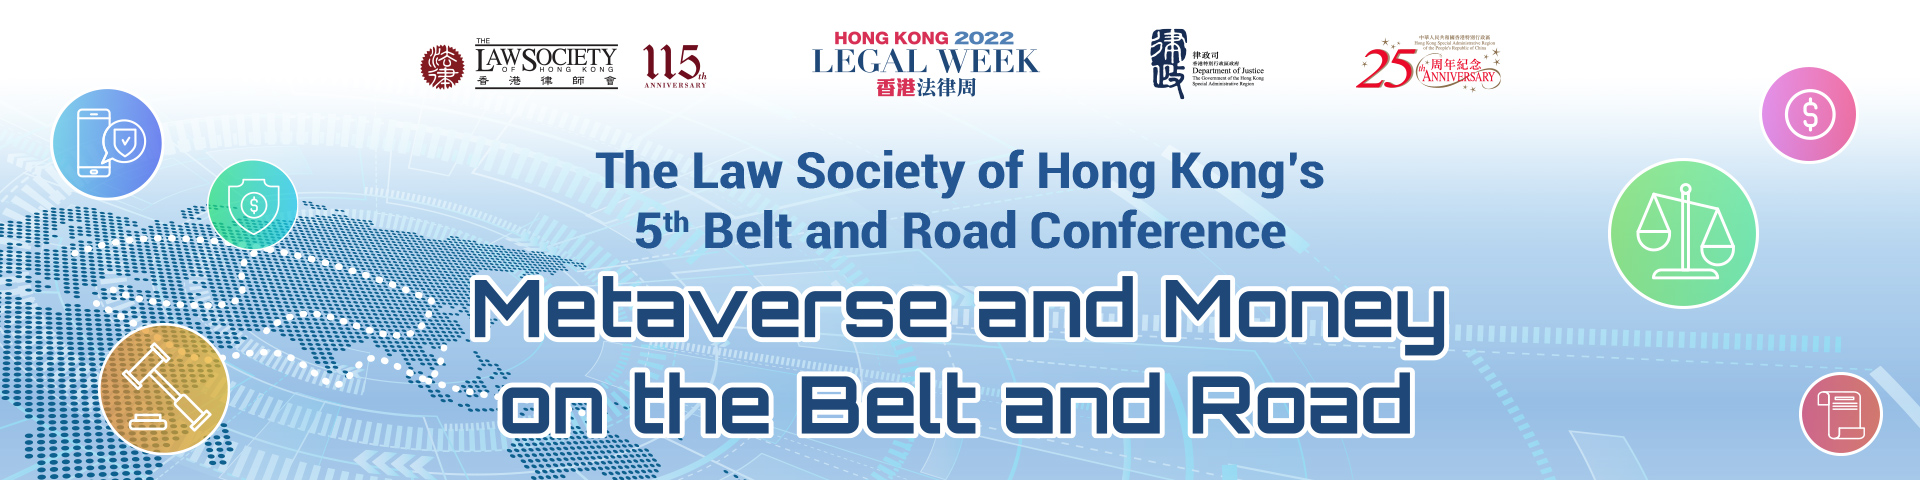 5th Belt and Road Conference_EN